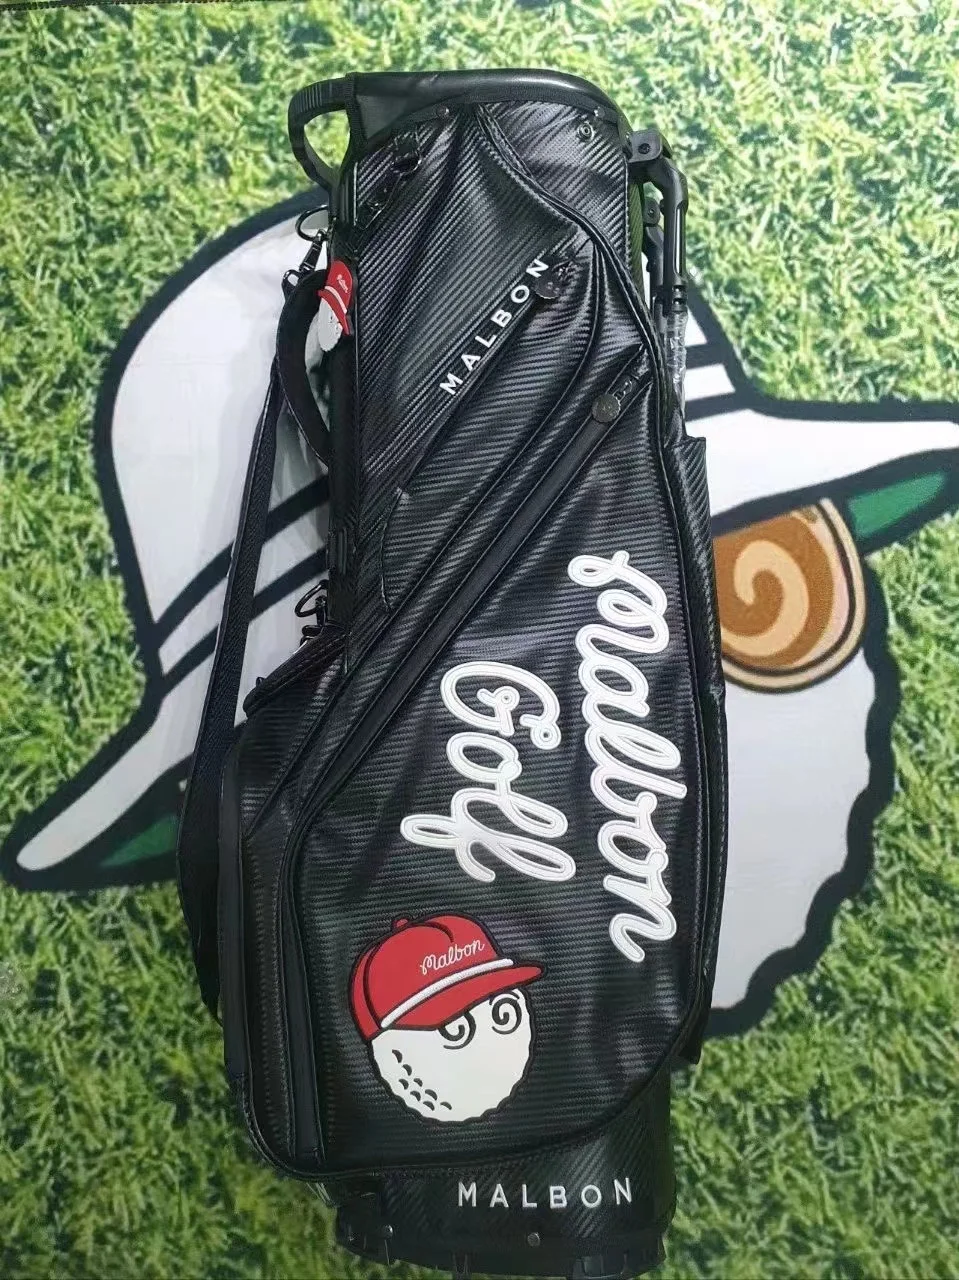 Nueva bolsa de Golf de moda, bolsa portátil ultraligera, bolsa estándar para Club, bolsa de Golf en blanco y negro